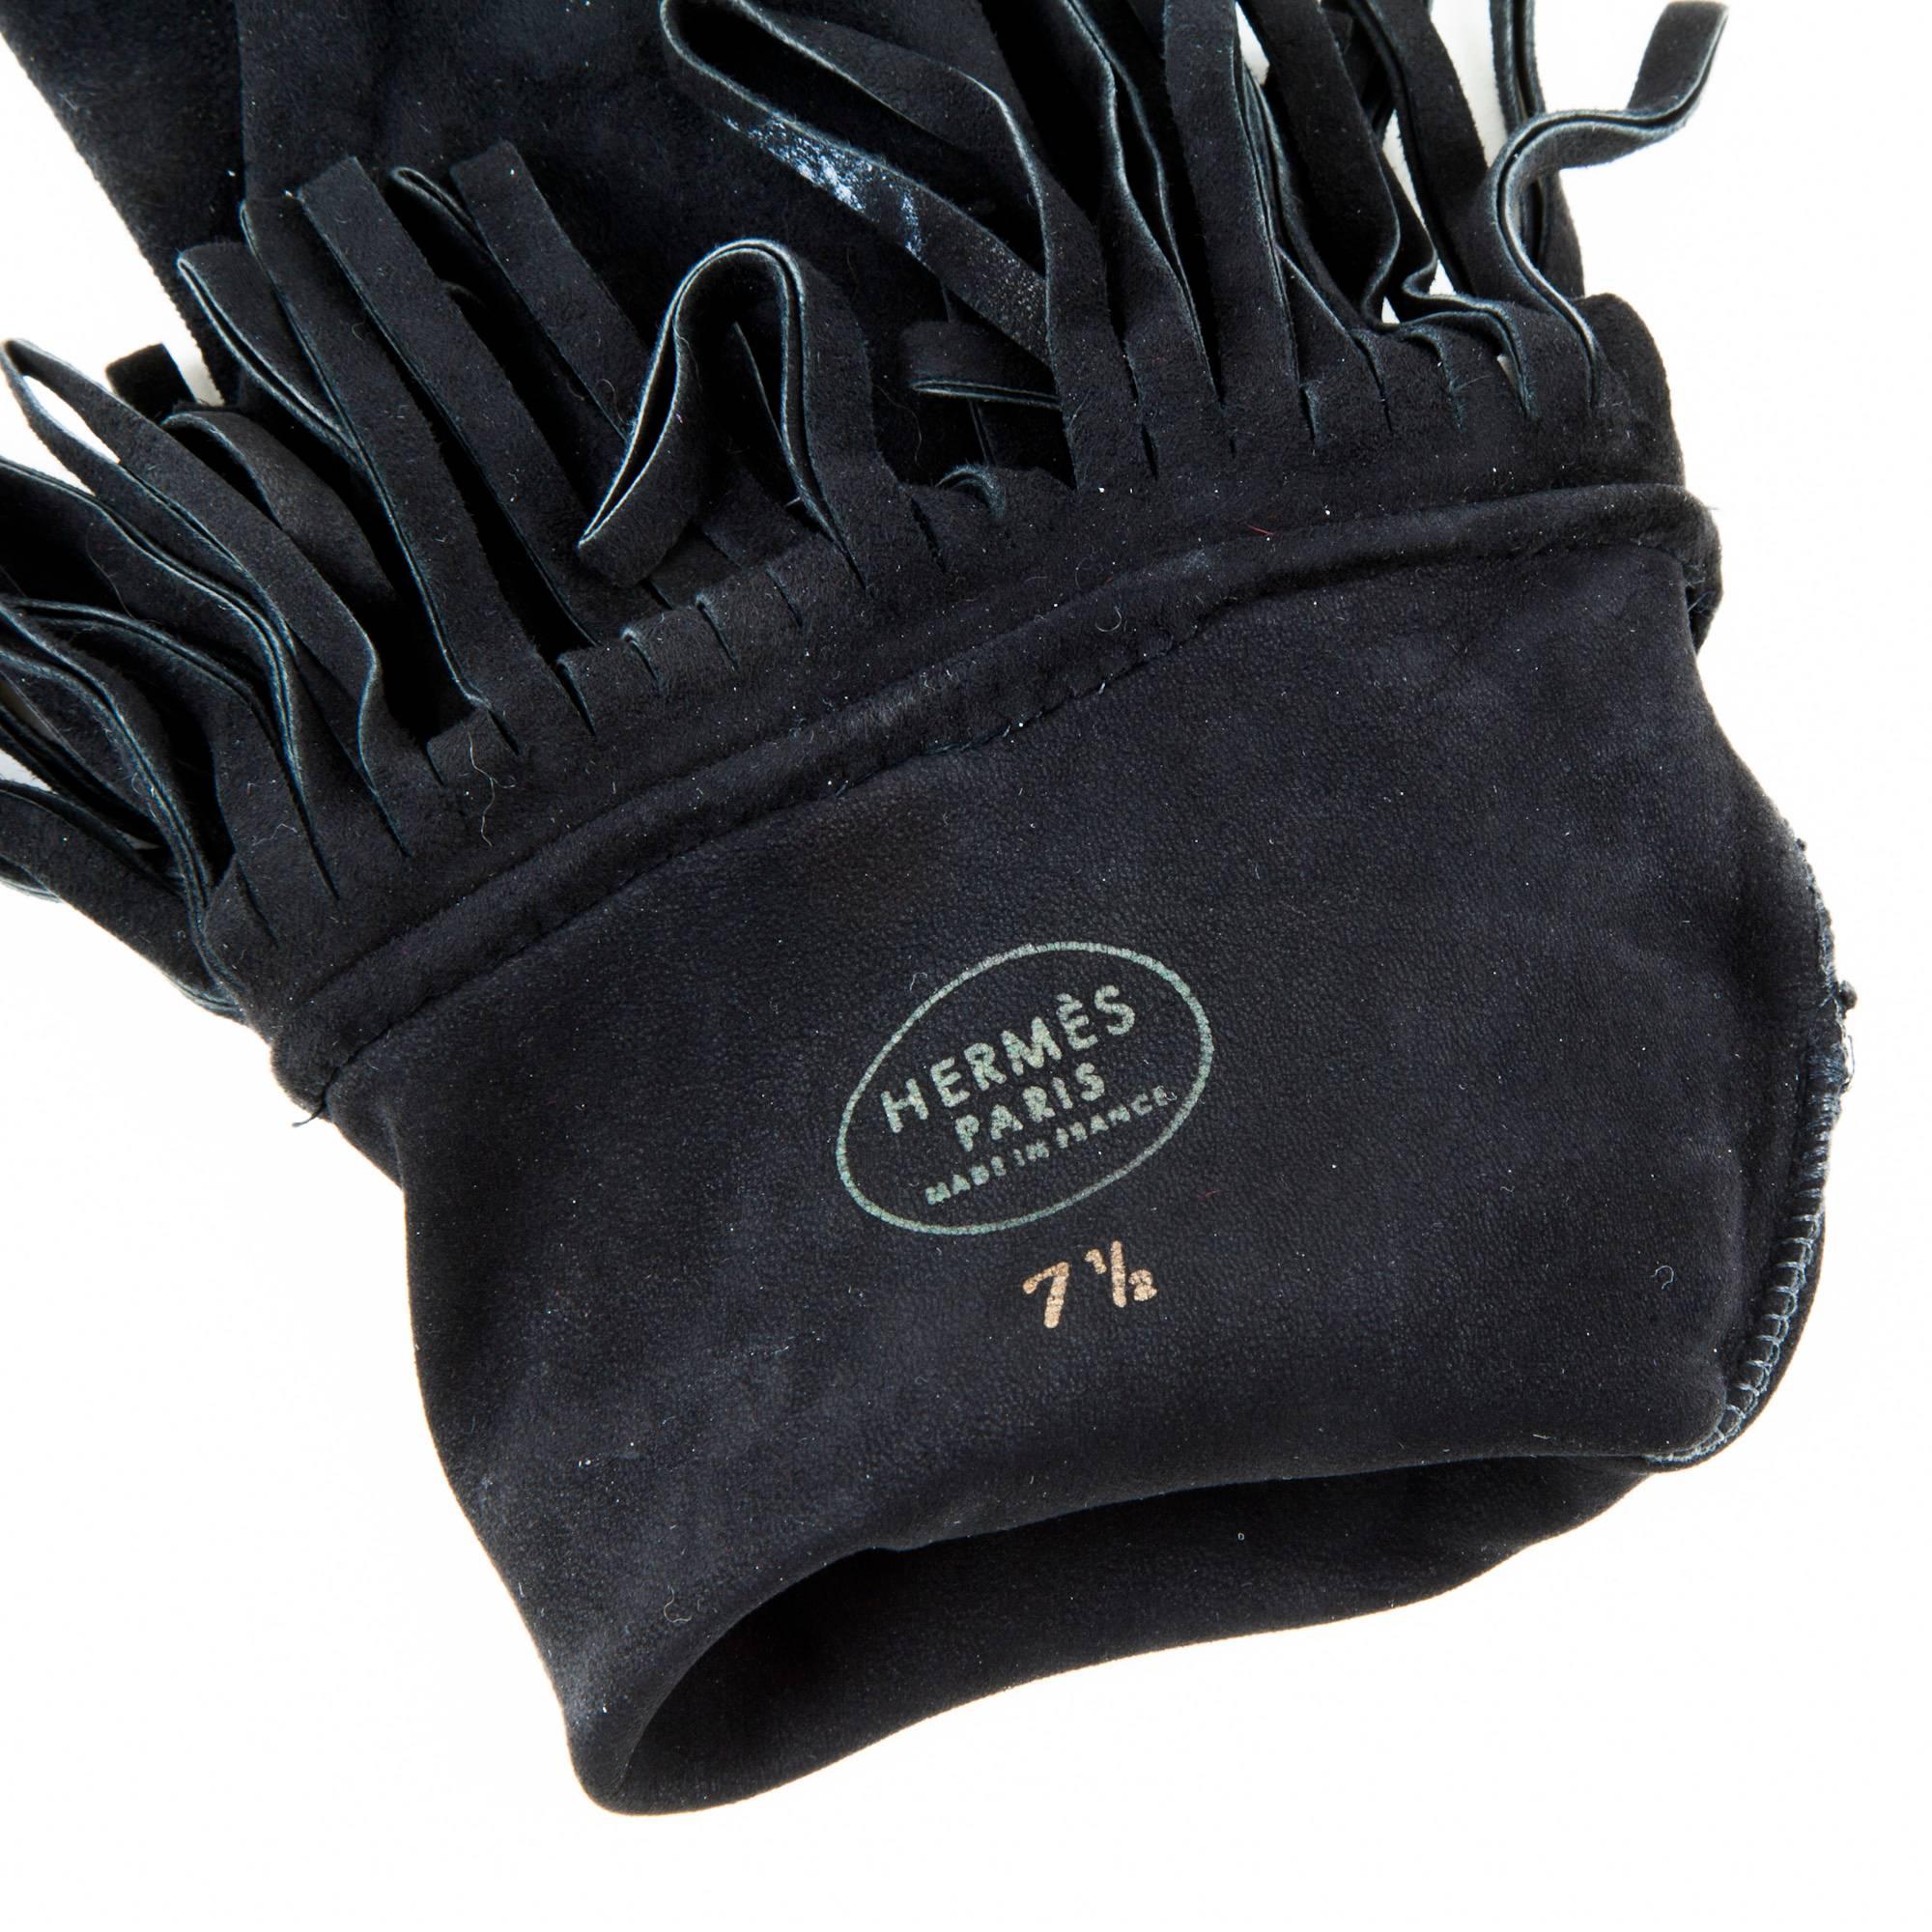 Women's HERMES Mid-Length Fringed Gloves in Black Suede Size 7.5 EU